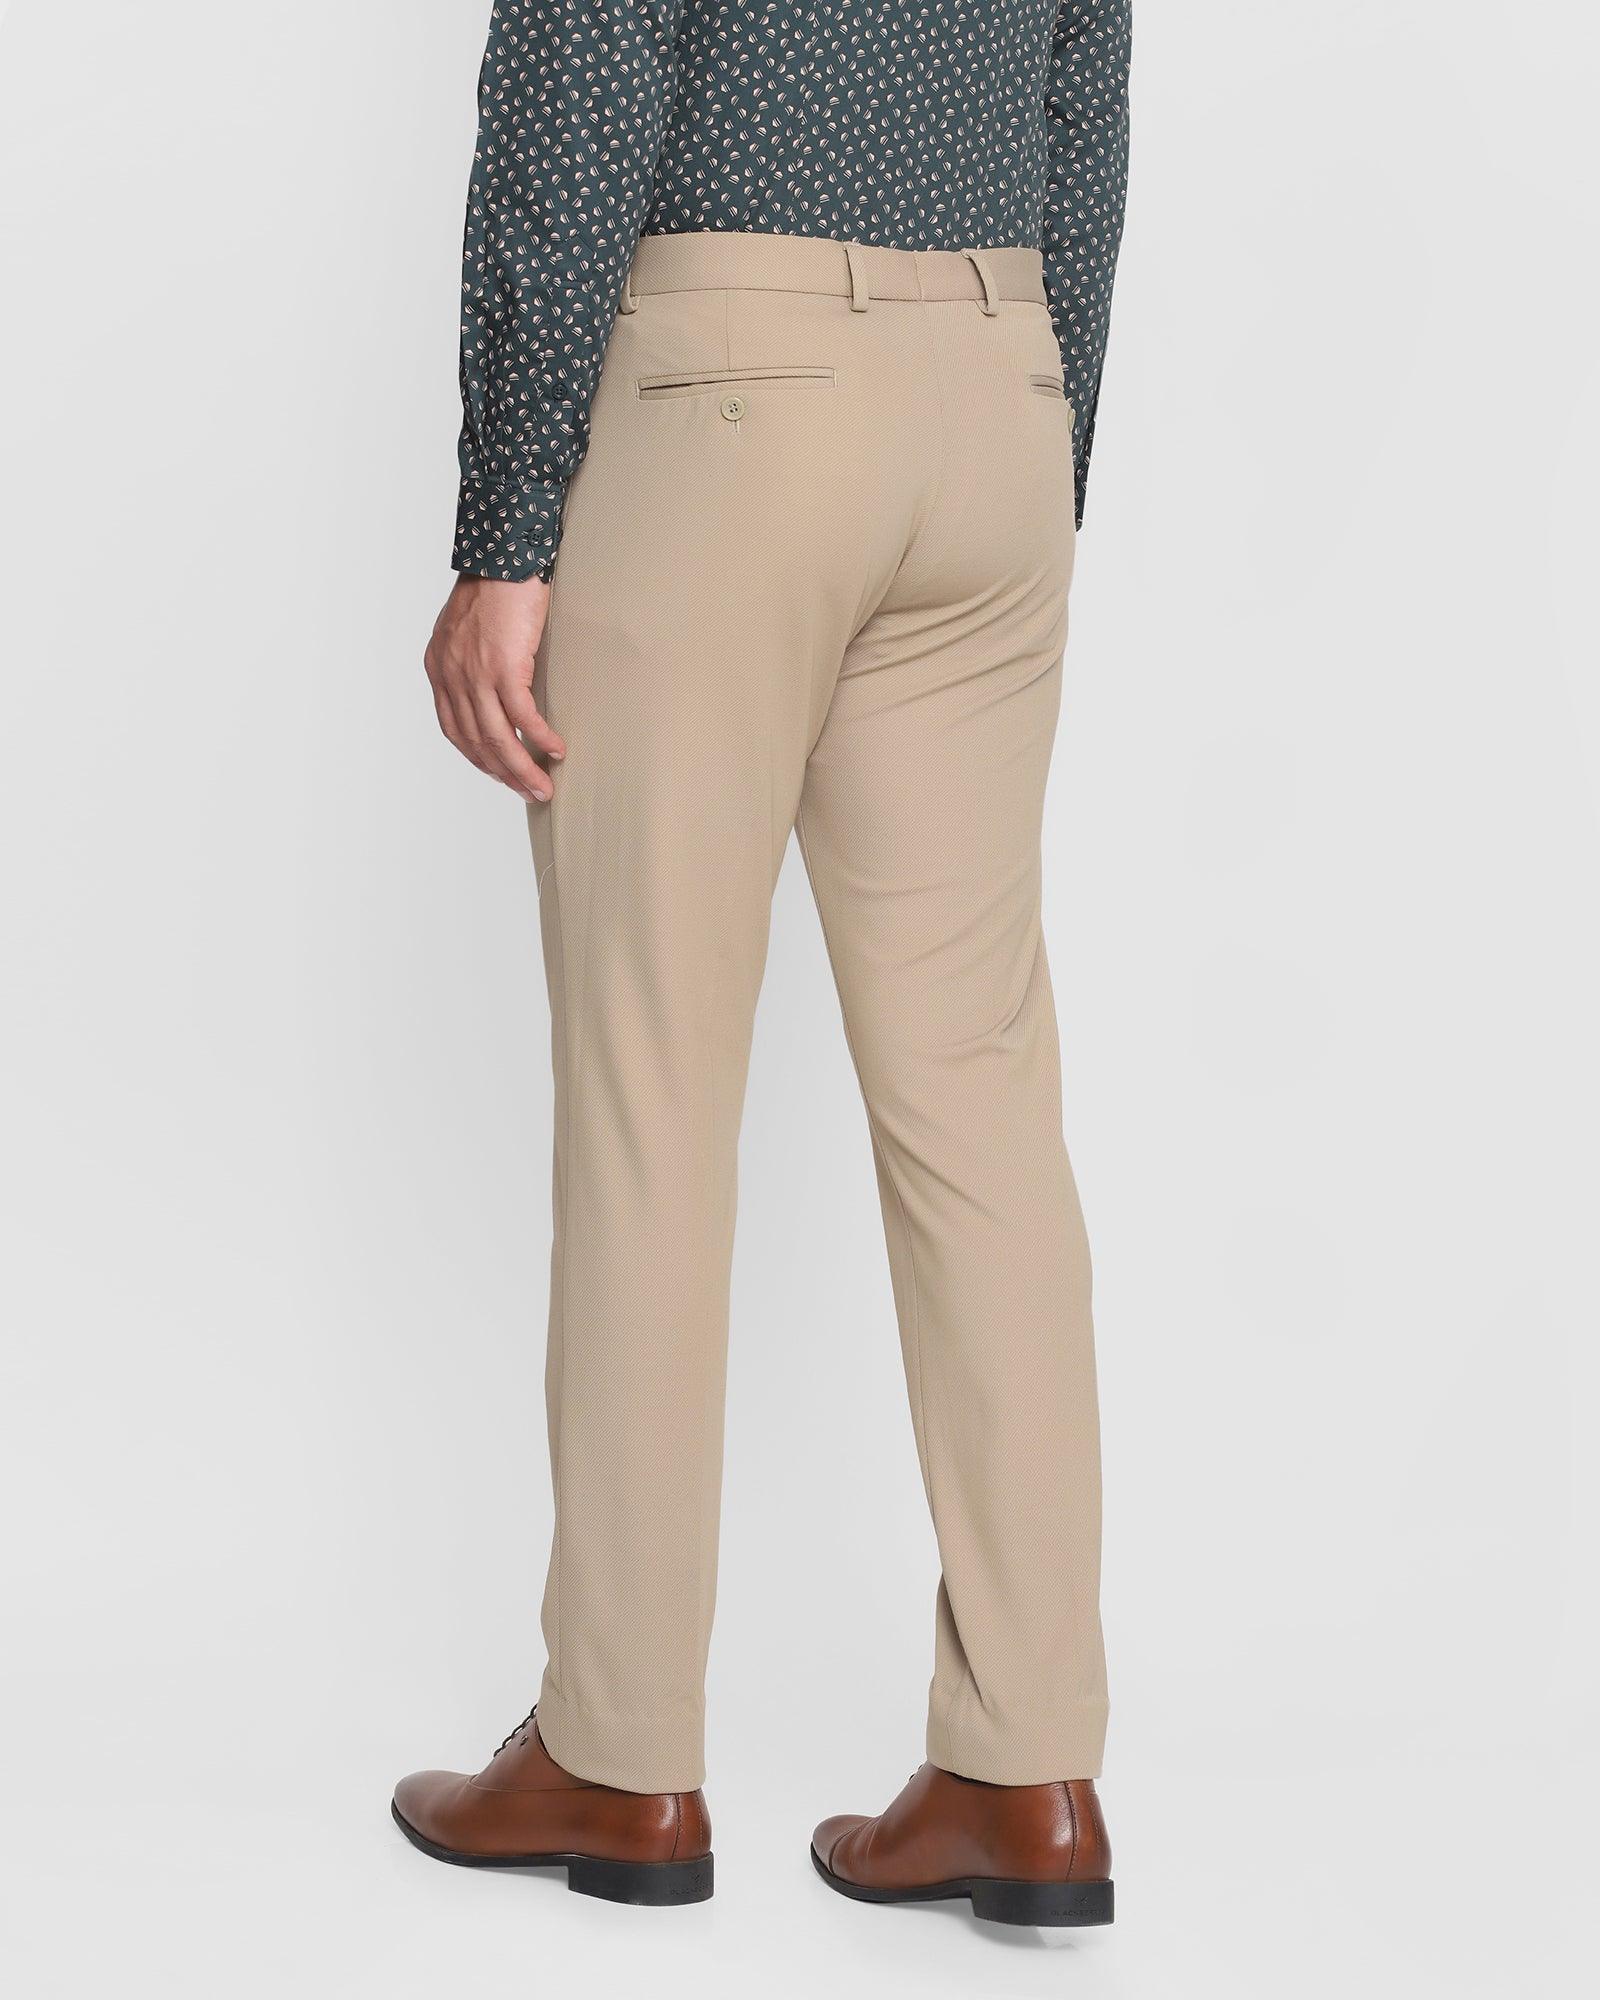 Slim Fit B-91 Formal Beige Textured Trouser - Deaser